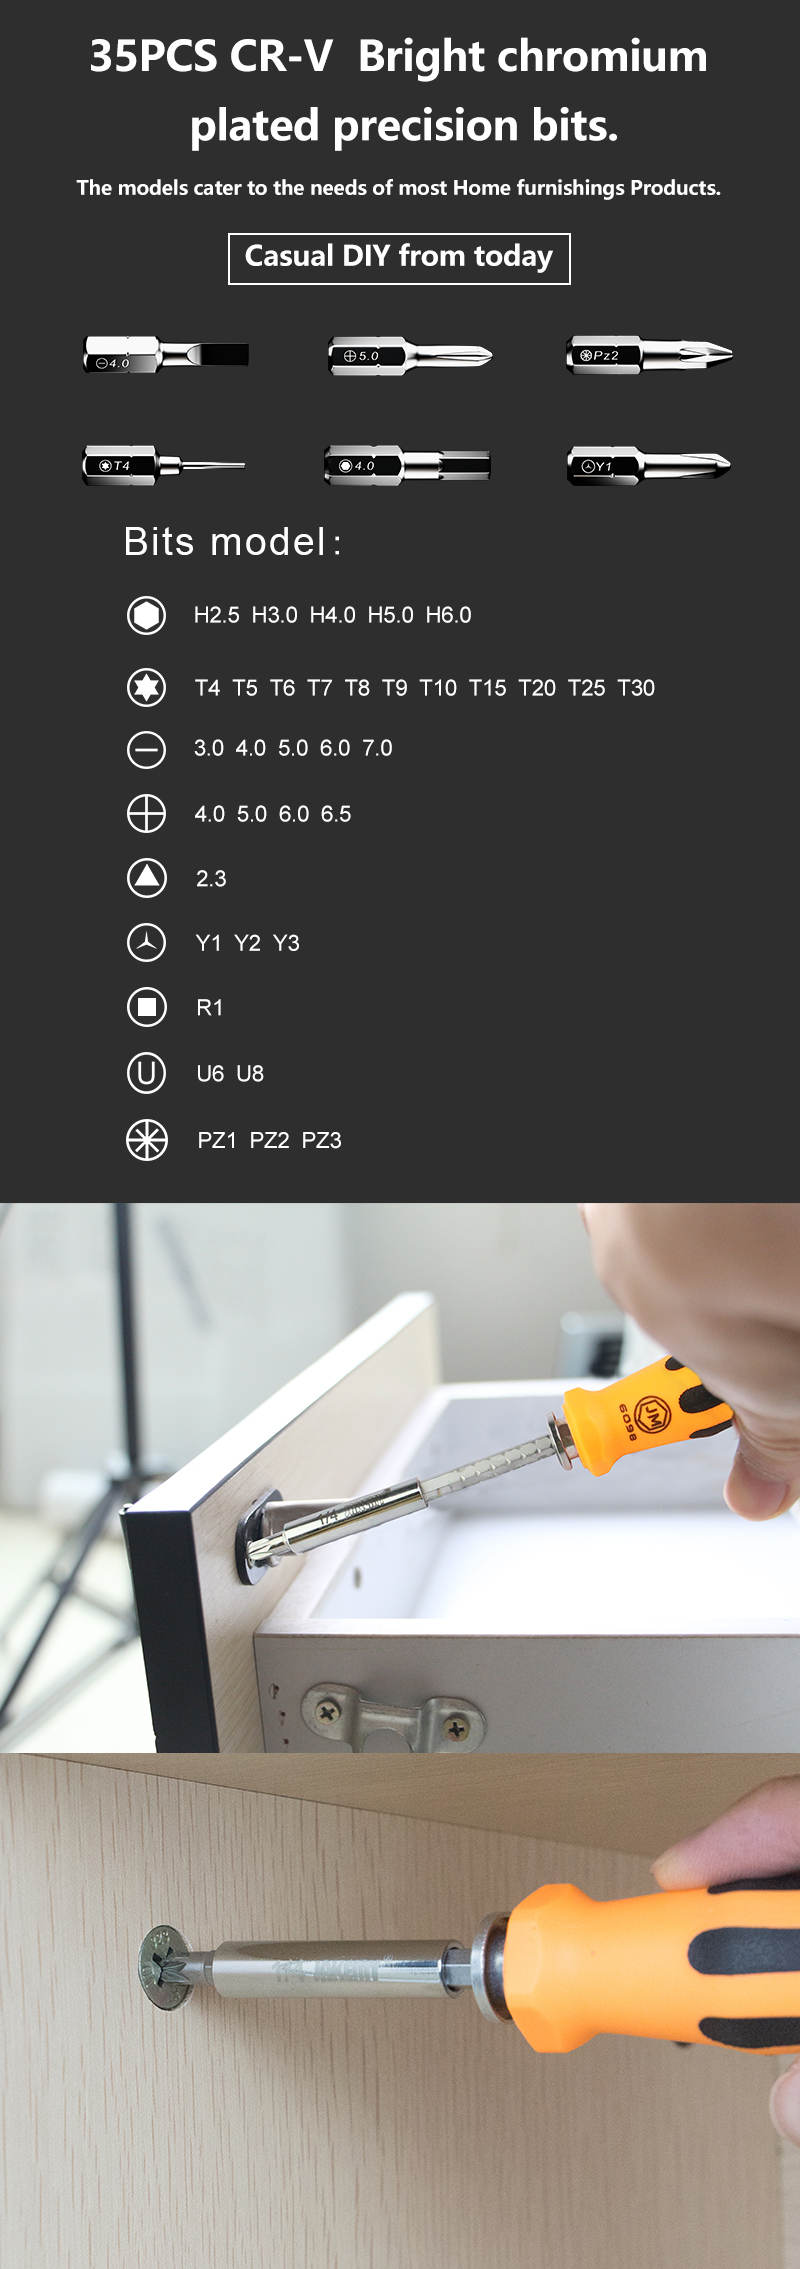 CR-V precision screwdriver bits